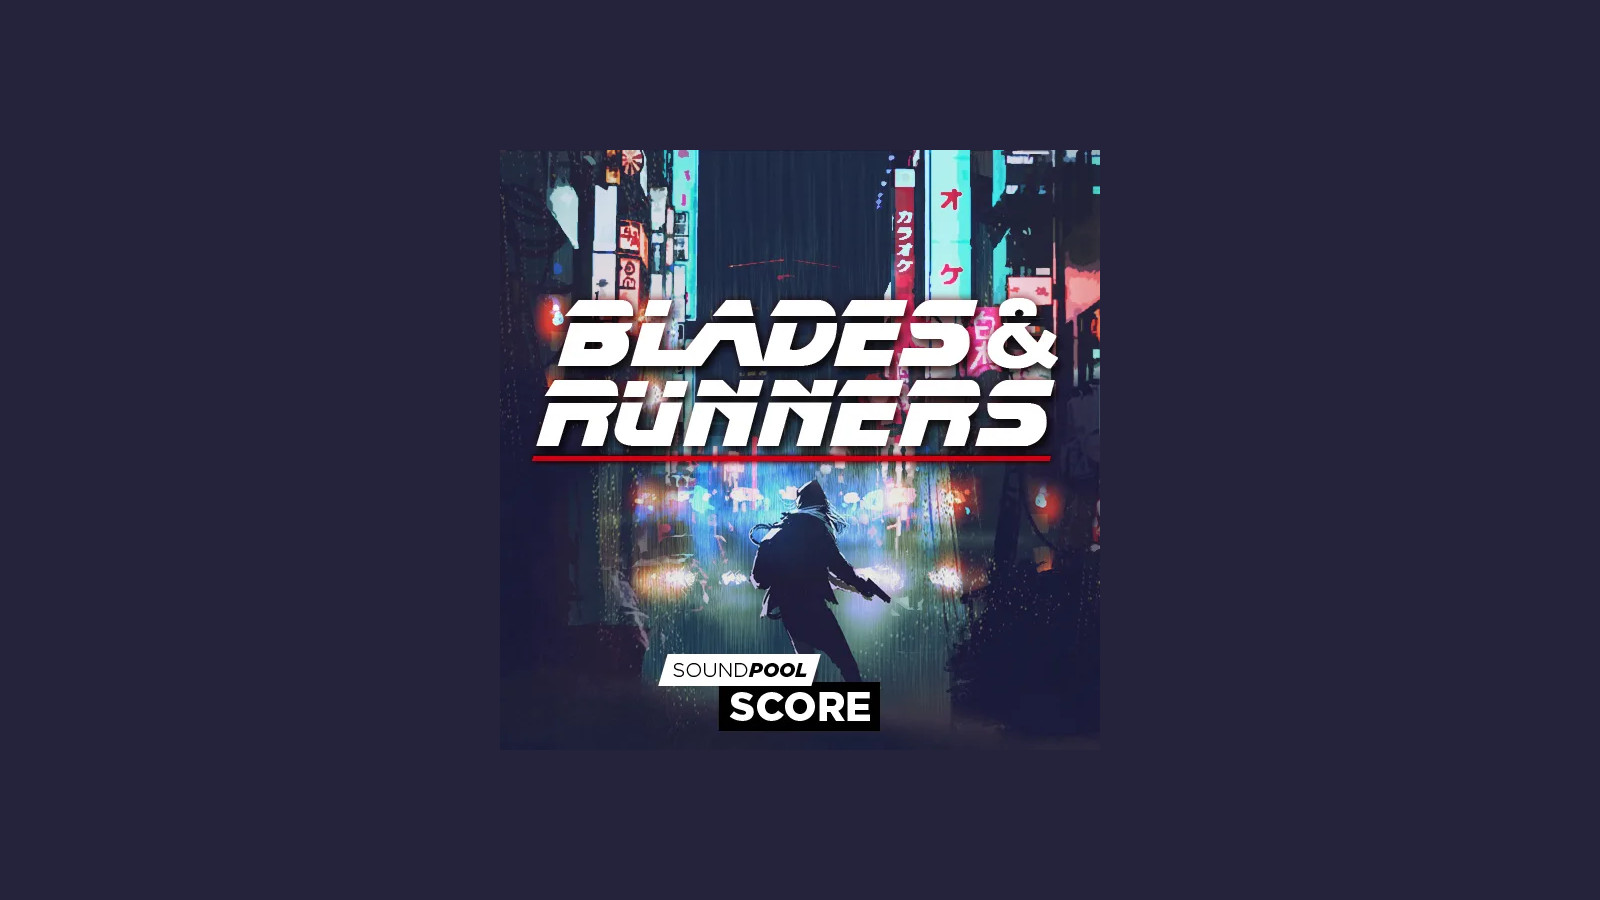 MAGIX Soundpool Blades & Runners ProducerPlanet CD Key 5.65 $